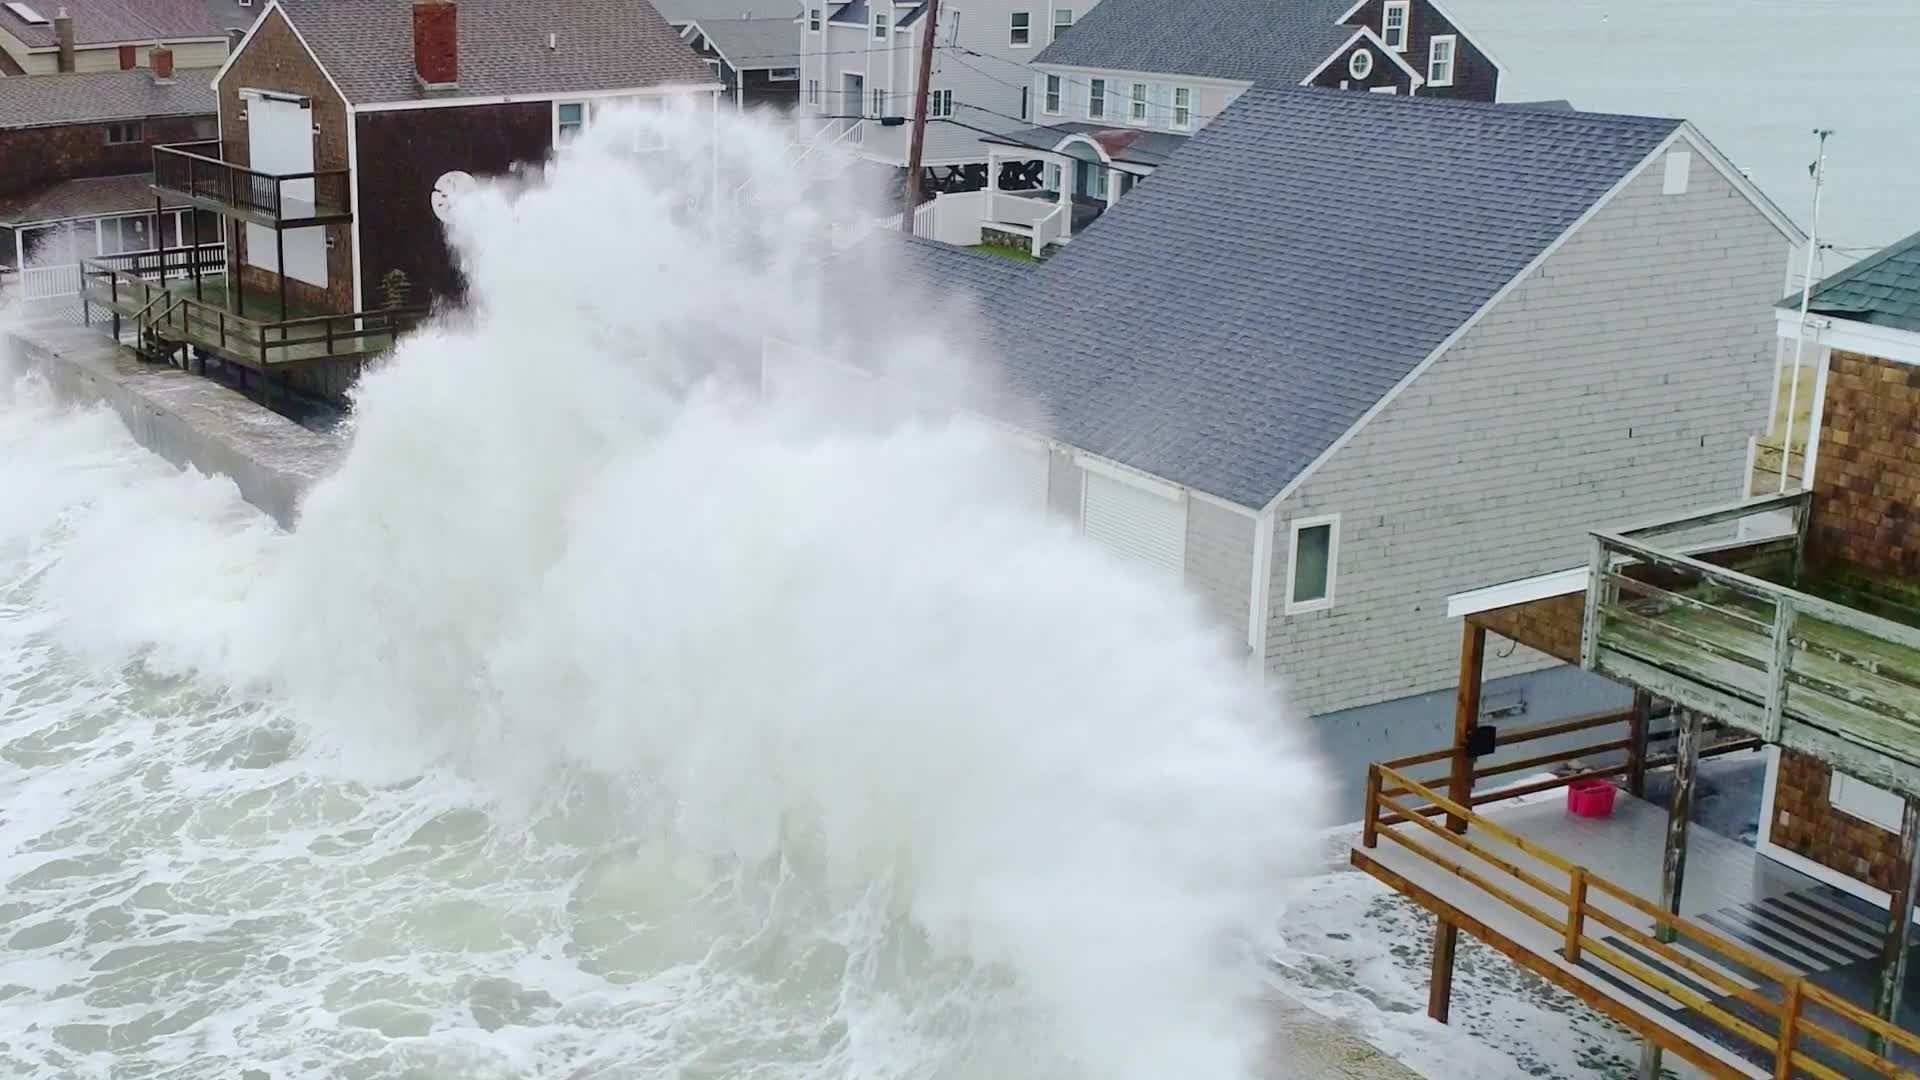 Drone captures waves pounding Massachusetts coastline in winter storm